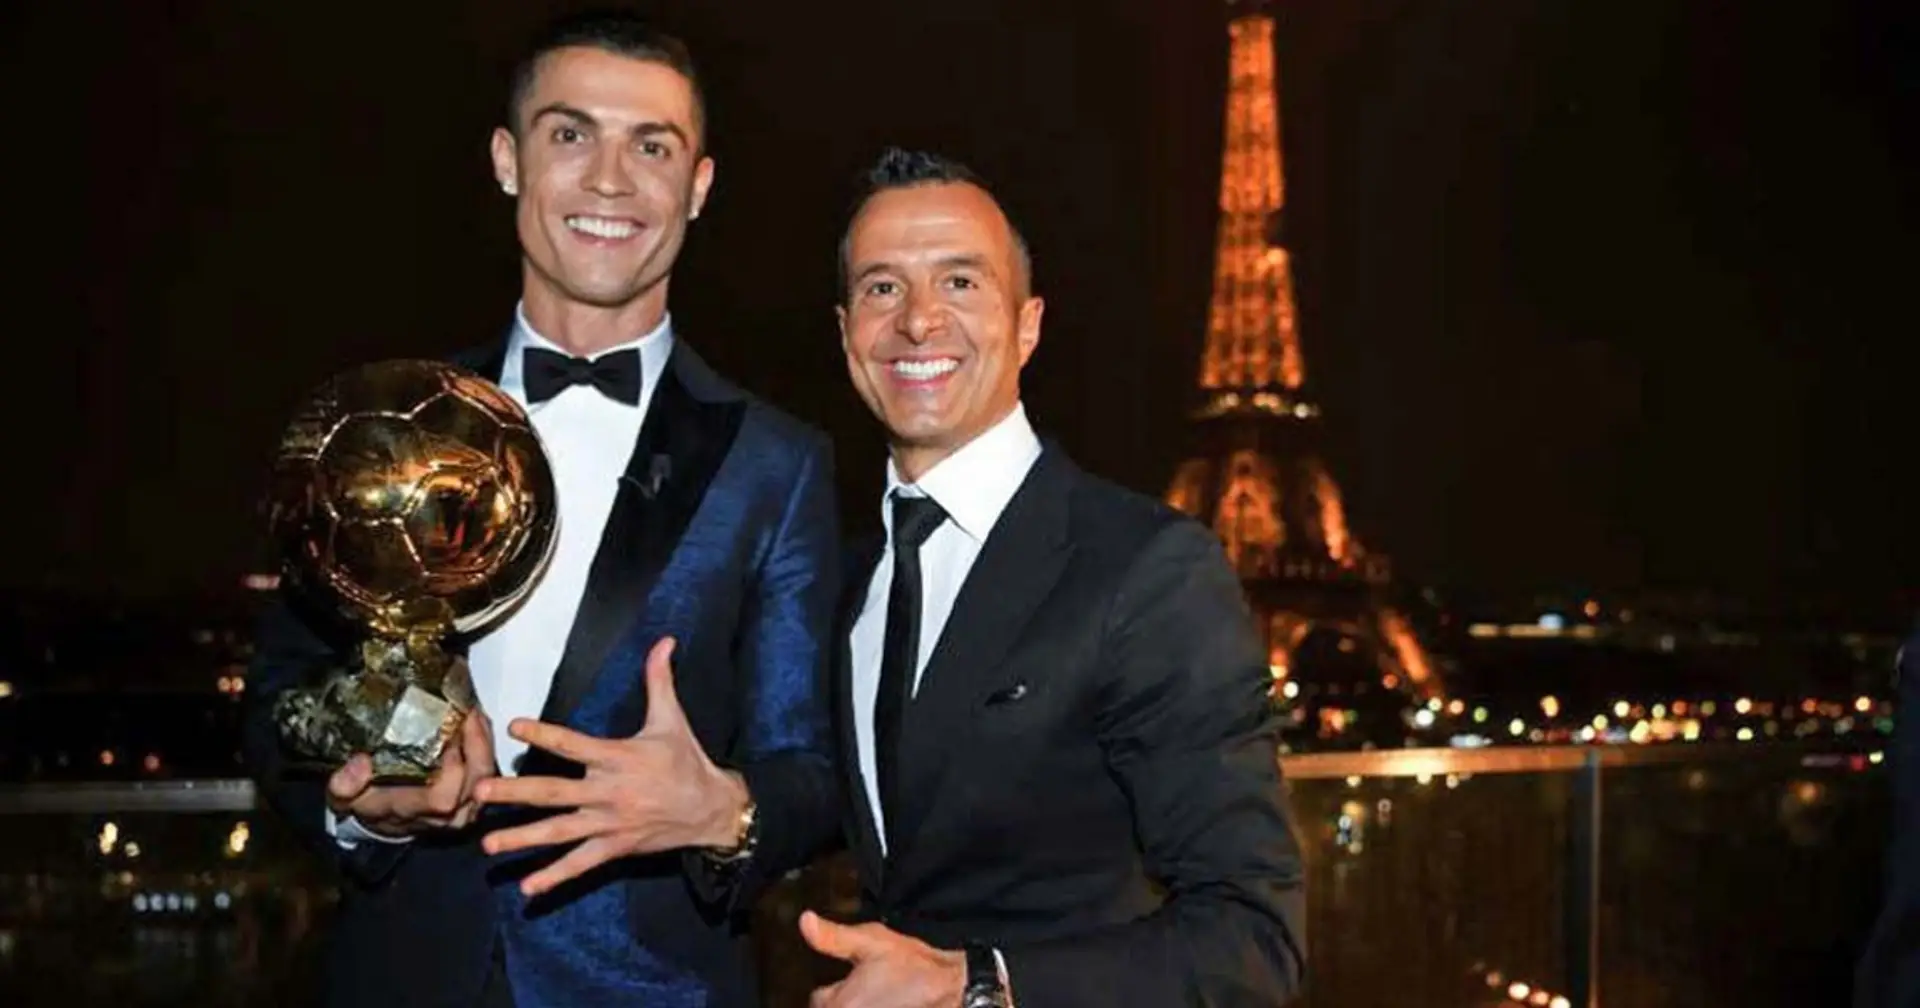 'He is where he is': Agent Jorge Mendes breaks silence on Cristiano Ronaldo split